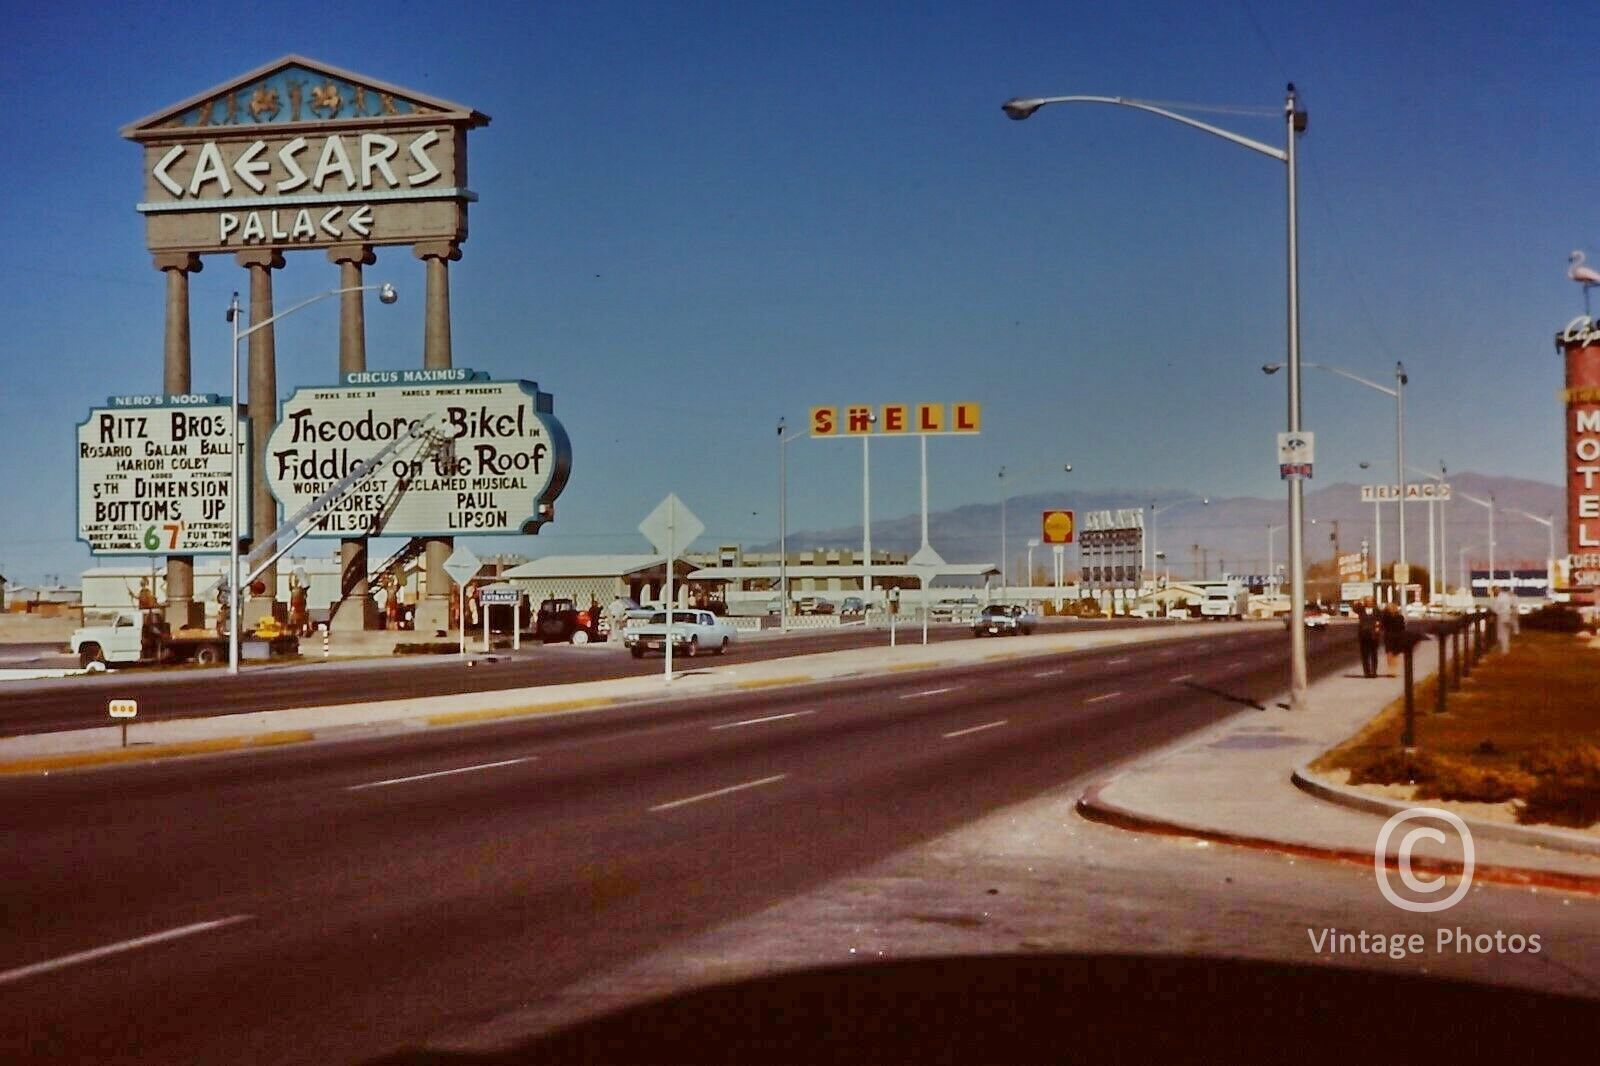 1960s Las Vegas Strip, Caesars Palace, Fiddler on the Roof